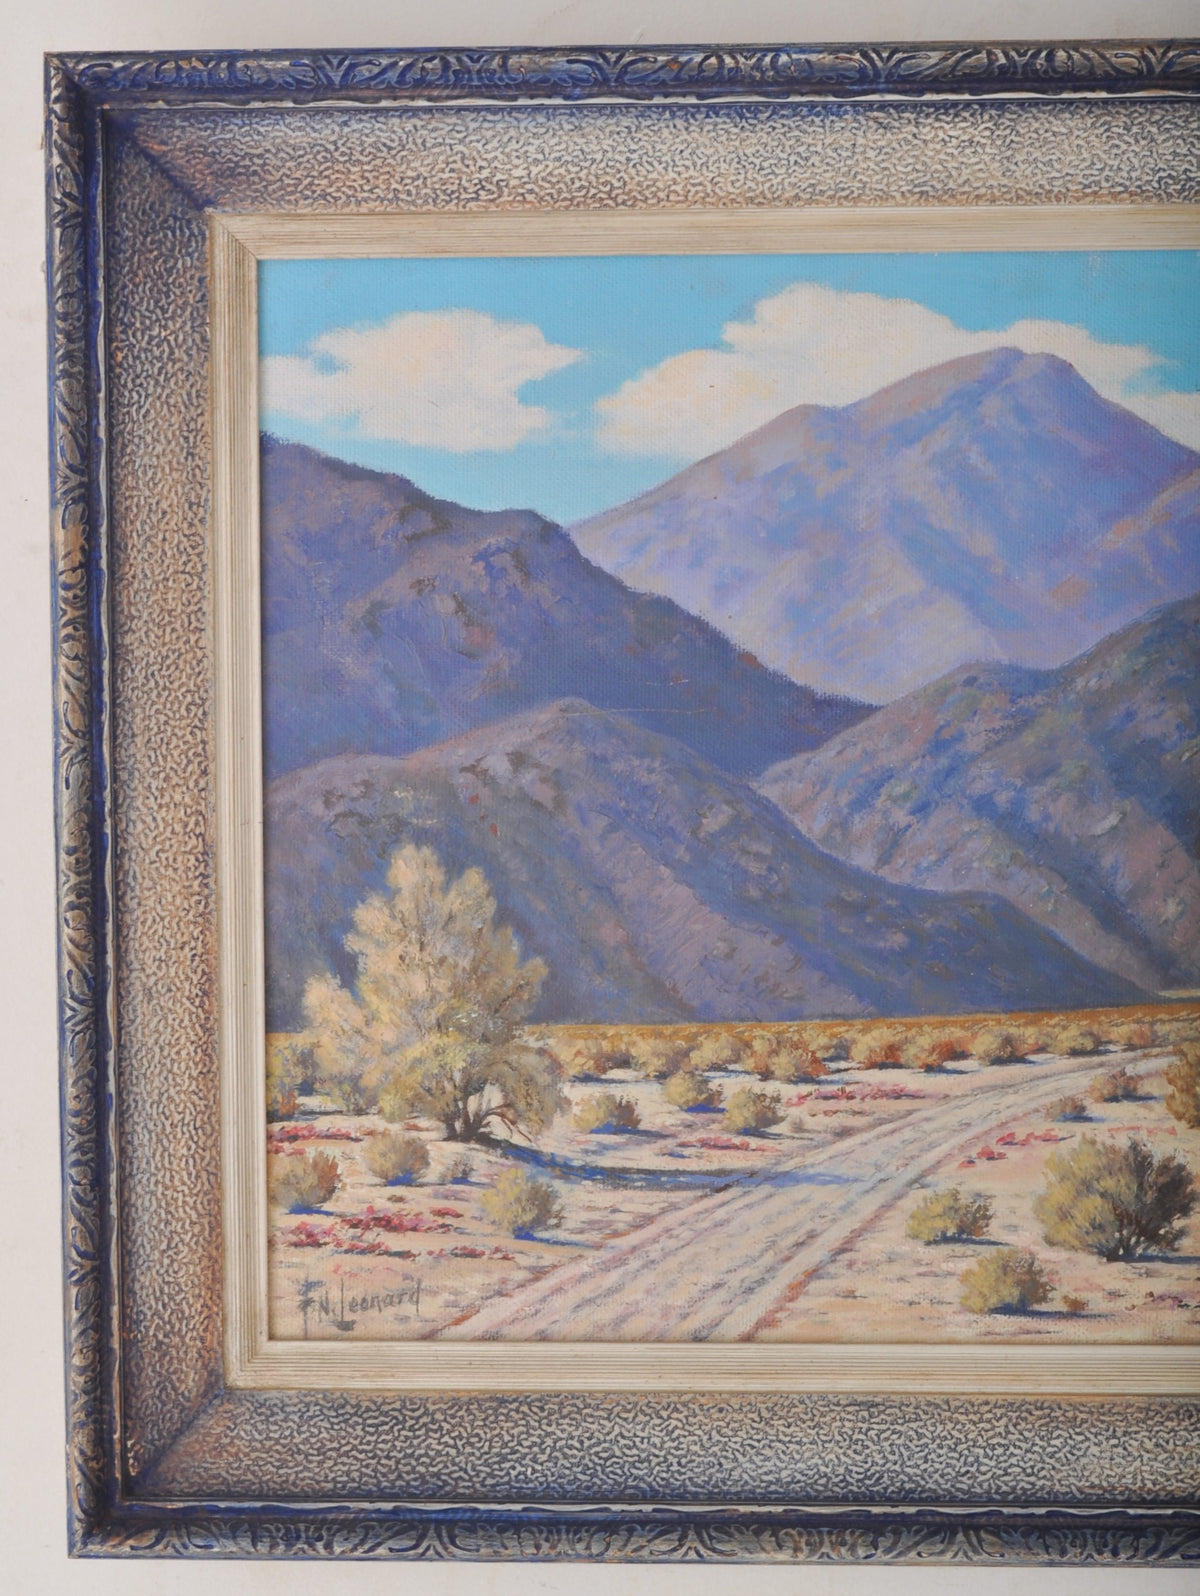 Antique Oil on Panel Painting, "California Desert," by Frank Leonard, Circa 1920